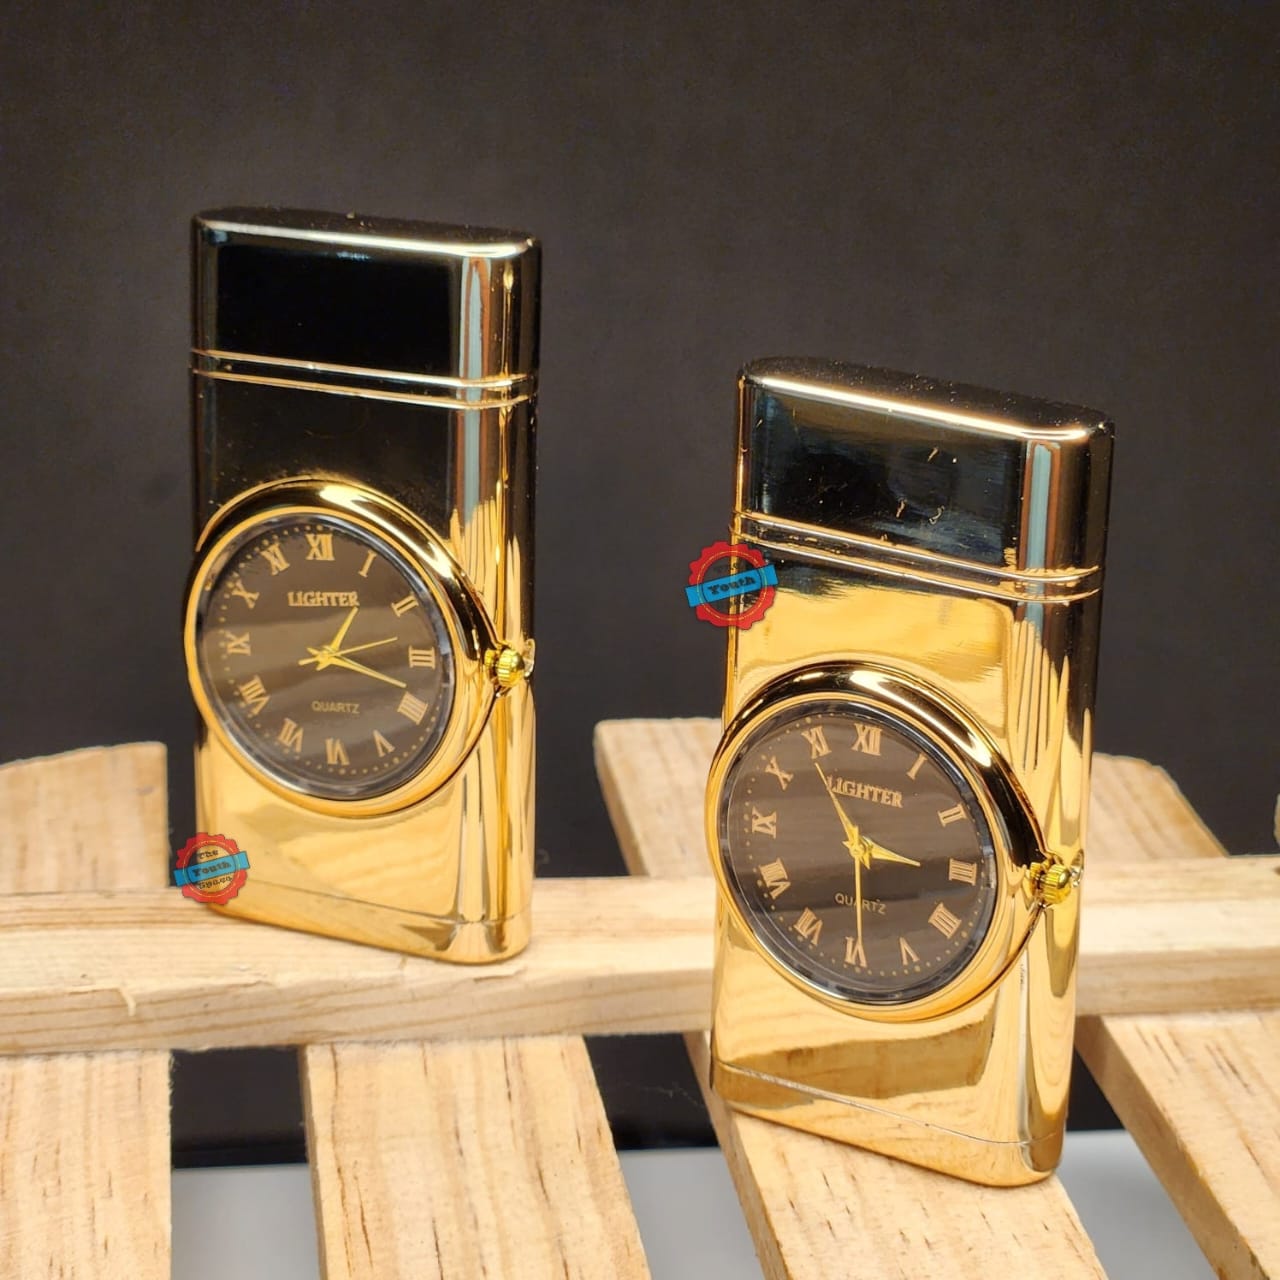 Golden clock jet lighter